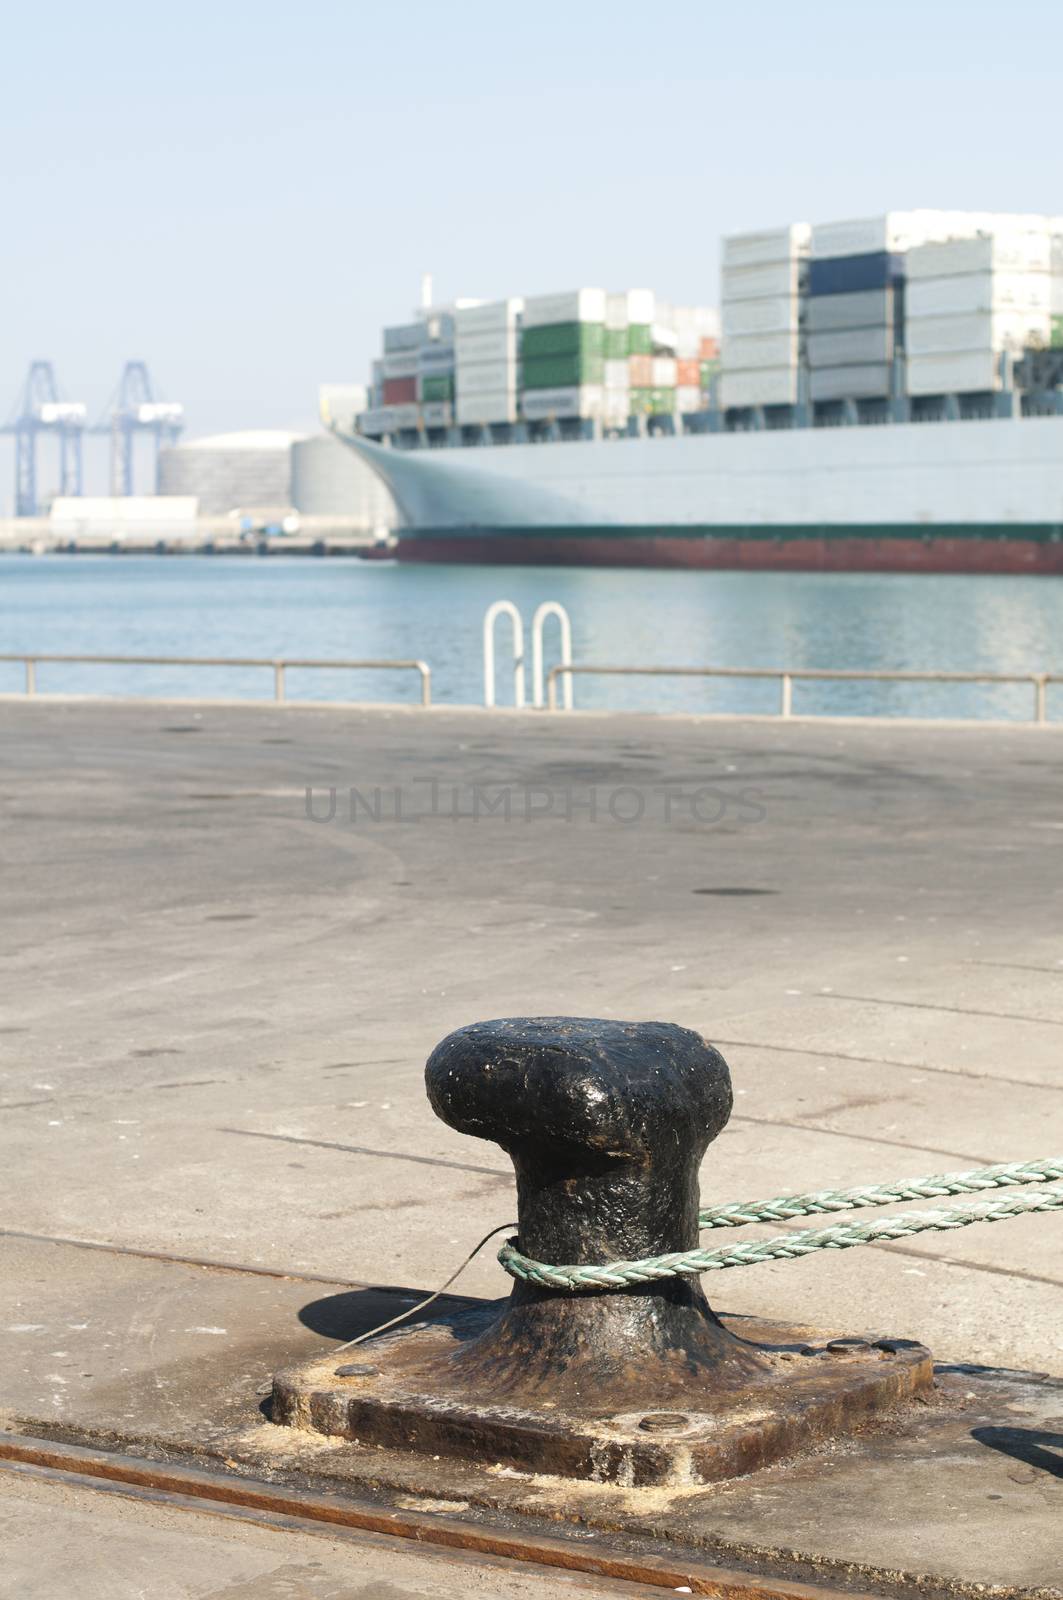 Ship moored to pier, view from the bollard by deyan_georgiev